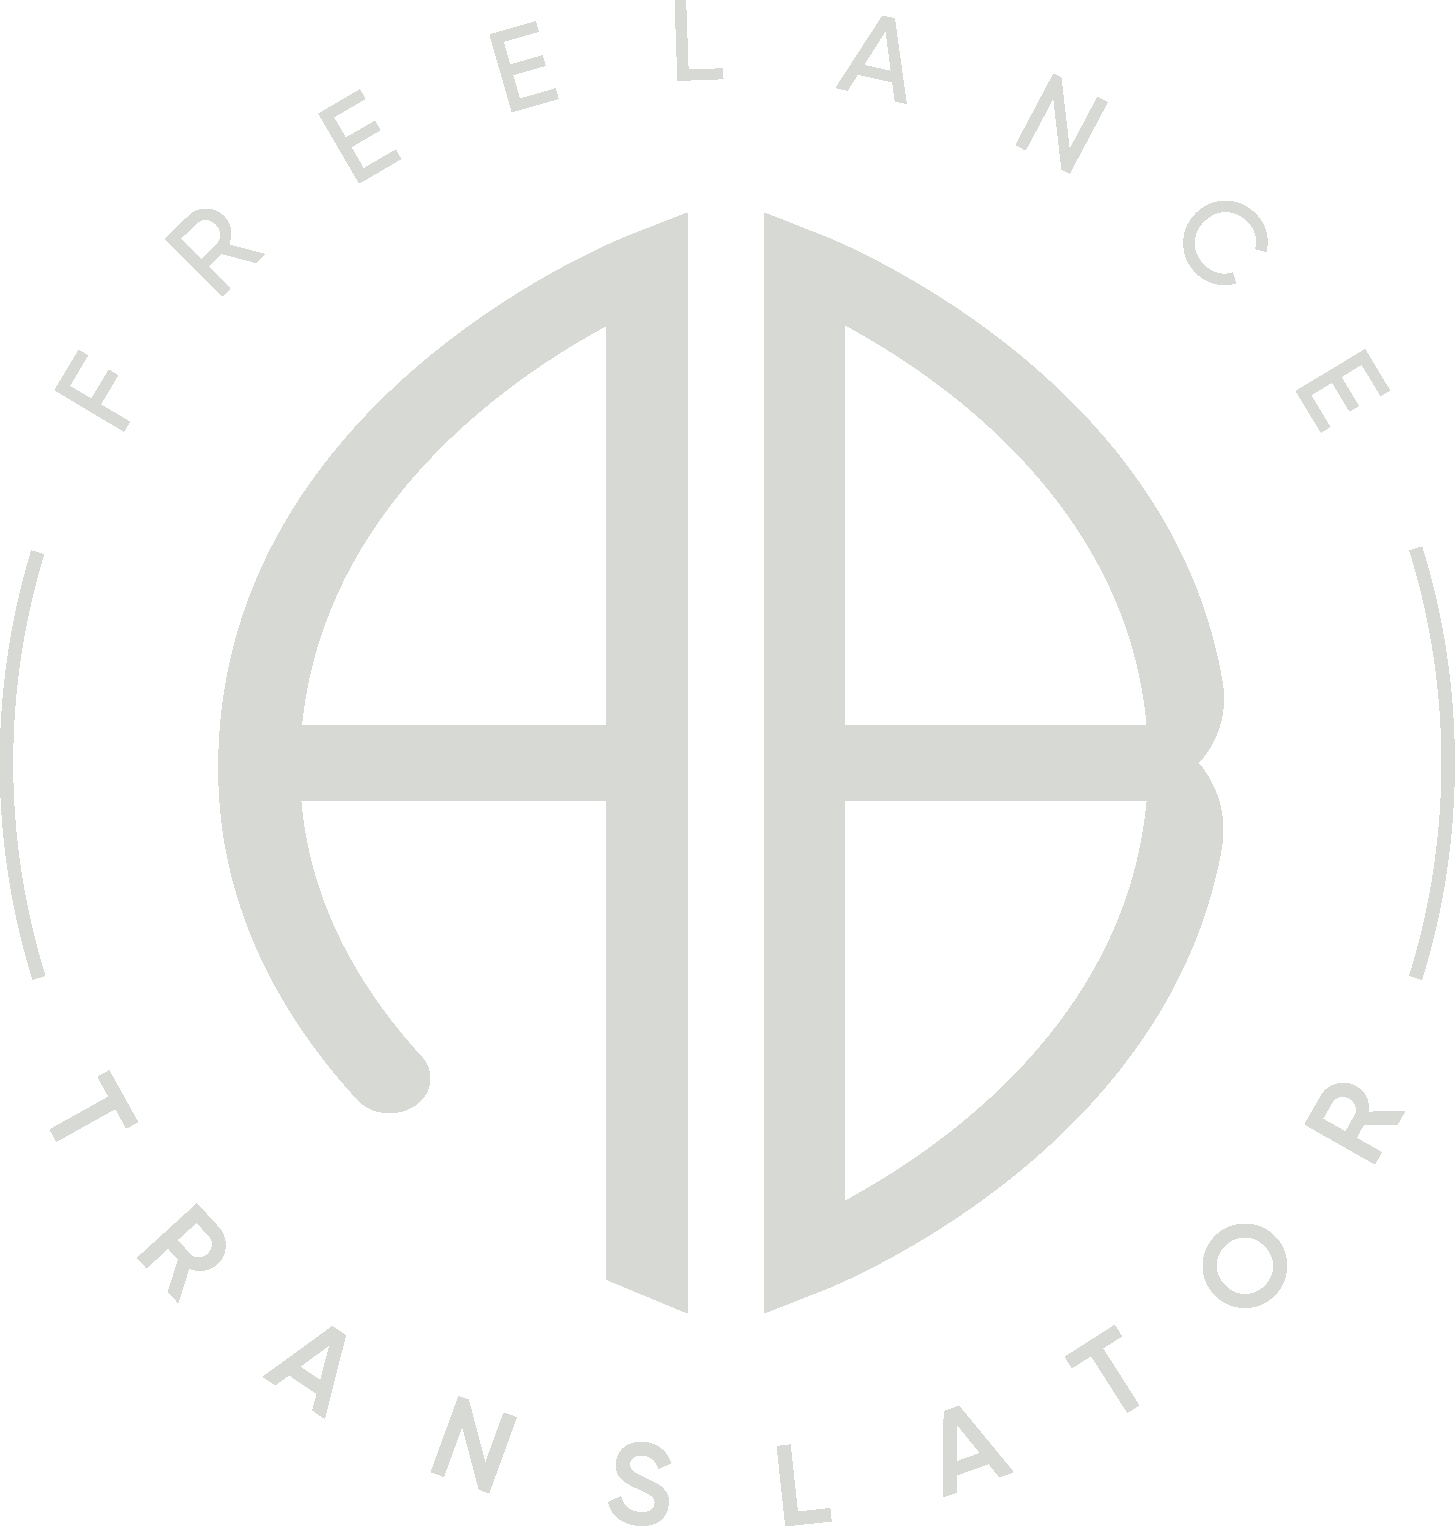 Freelance Translator